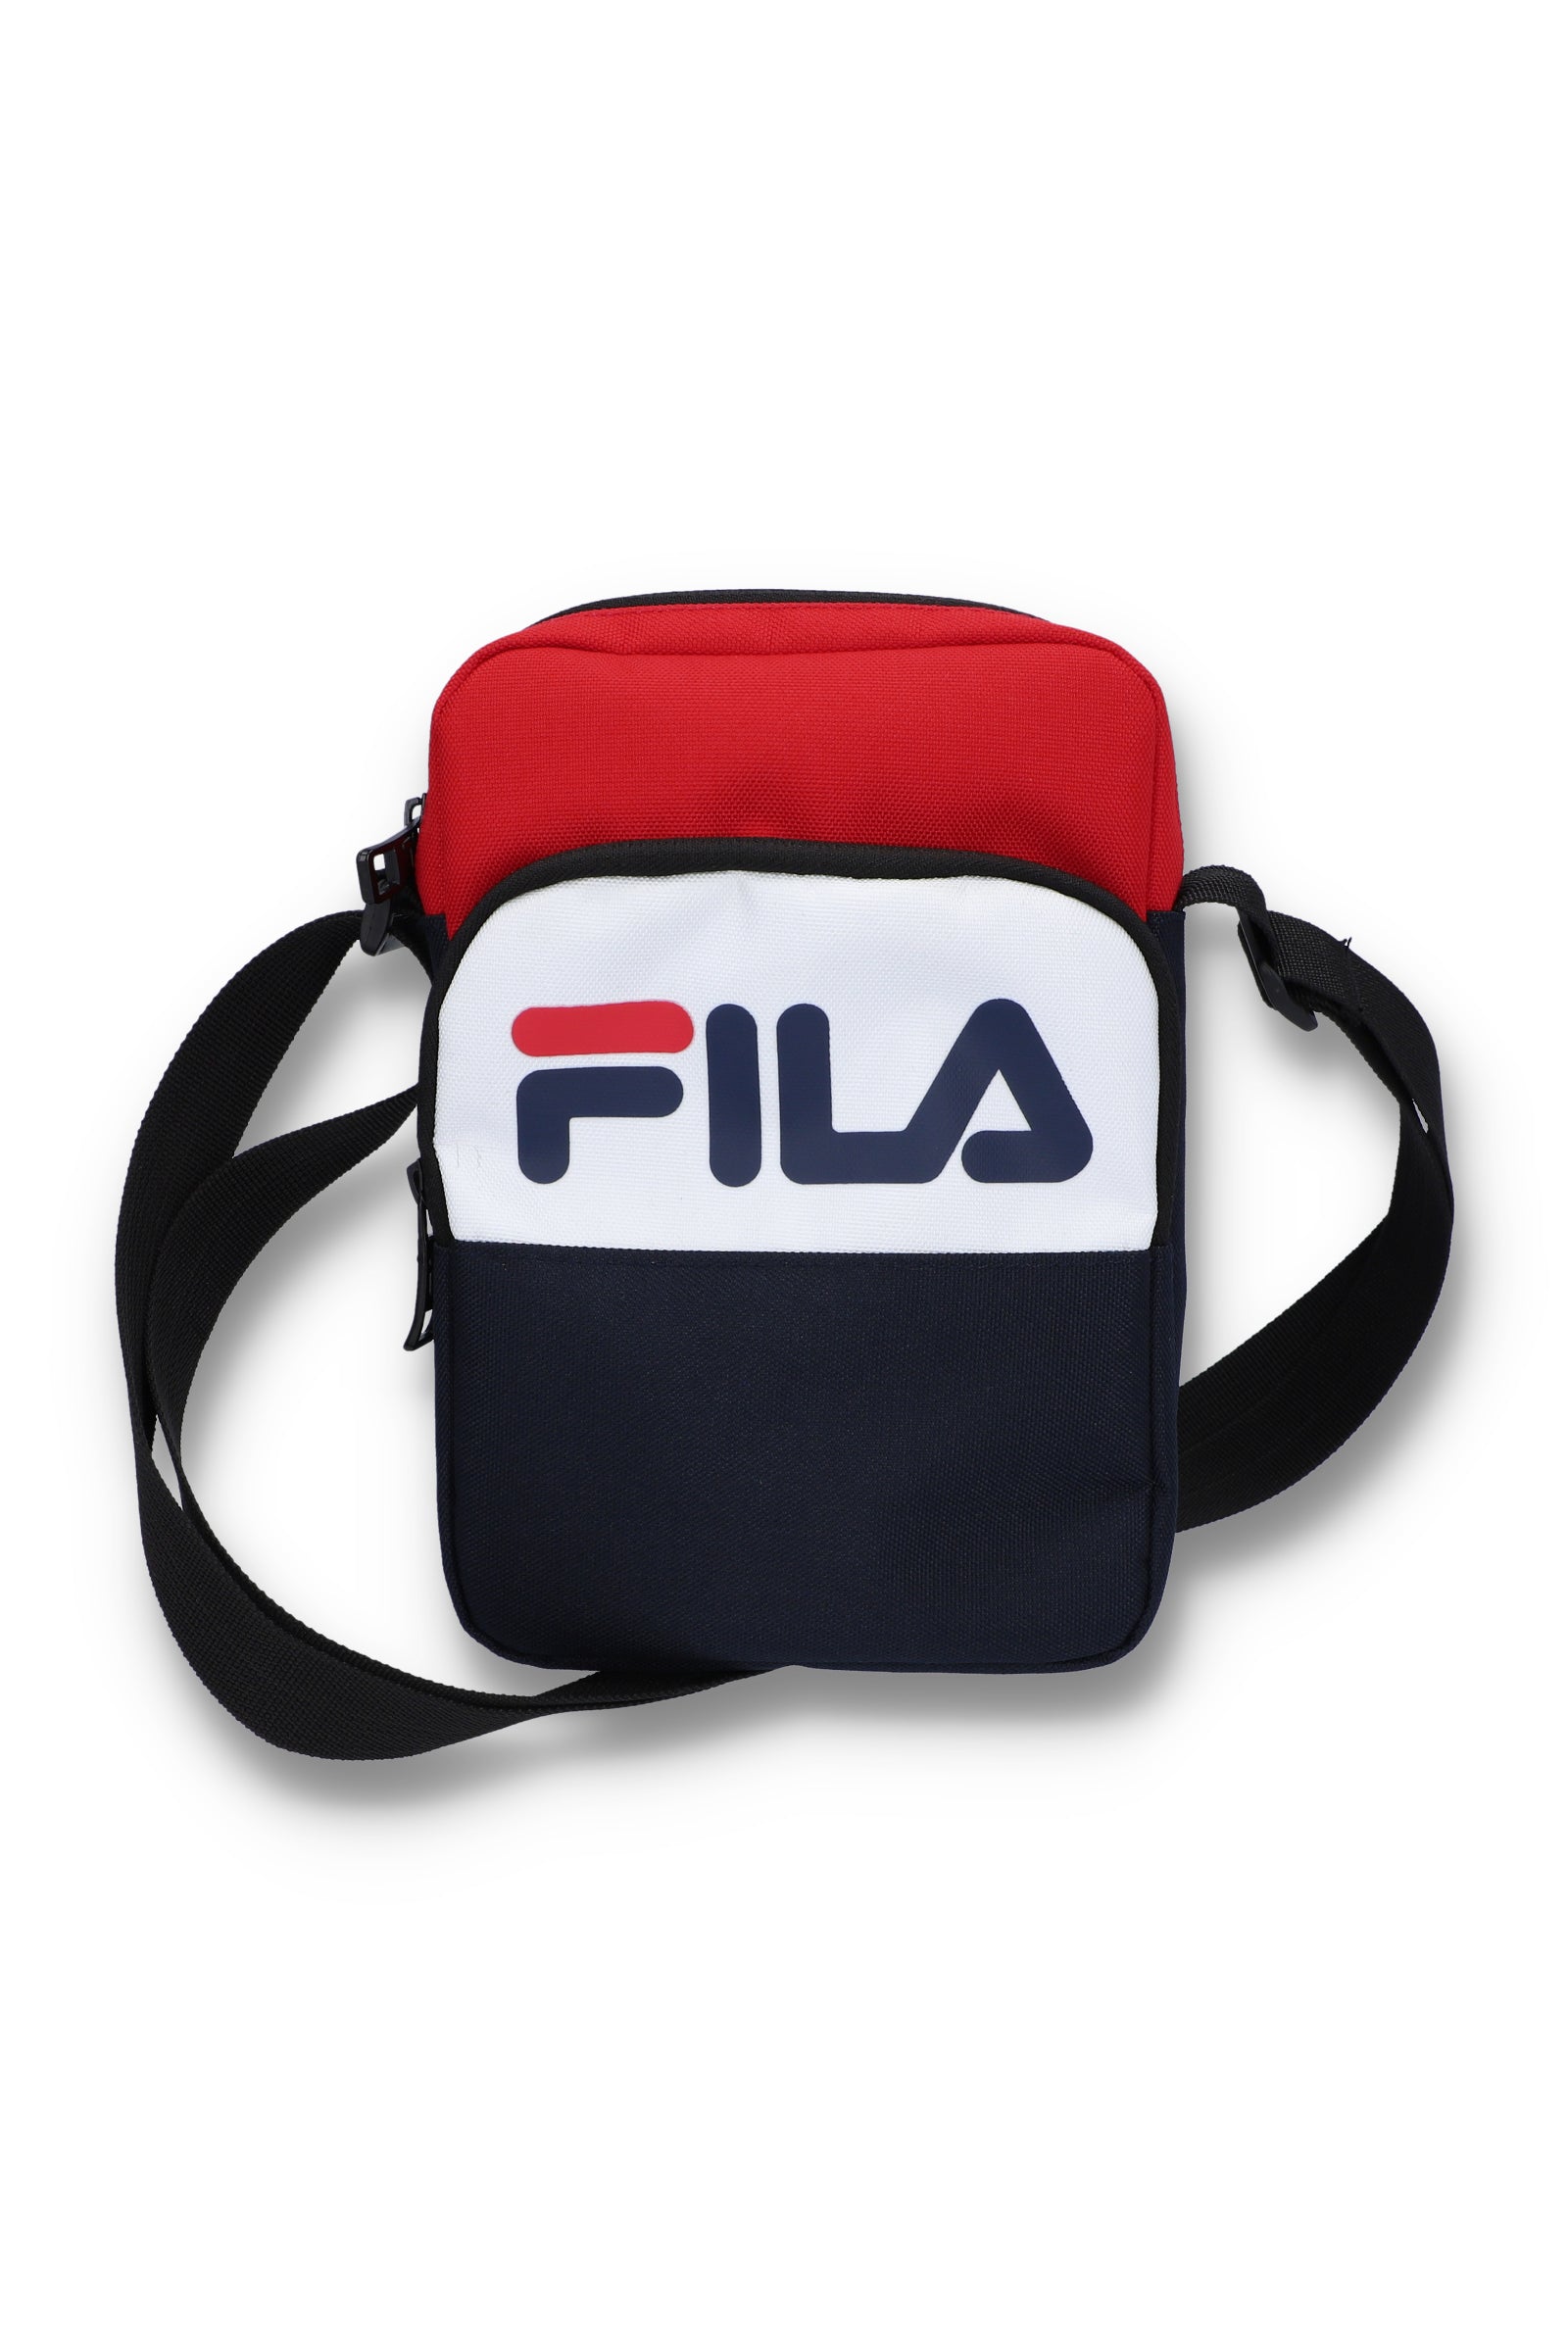 FILA - Bag Collection by Supanat Sungvornvit at Coroflot.com